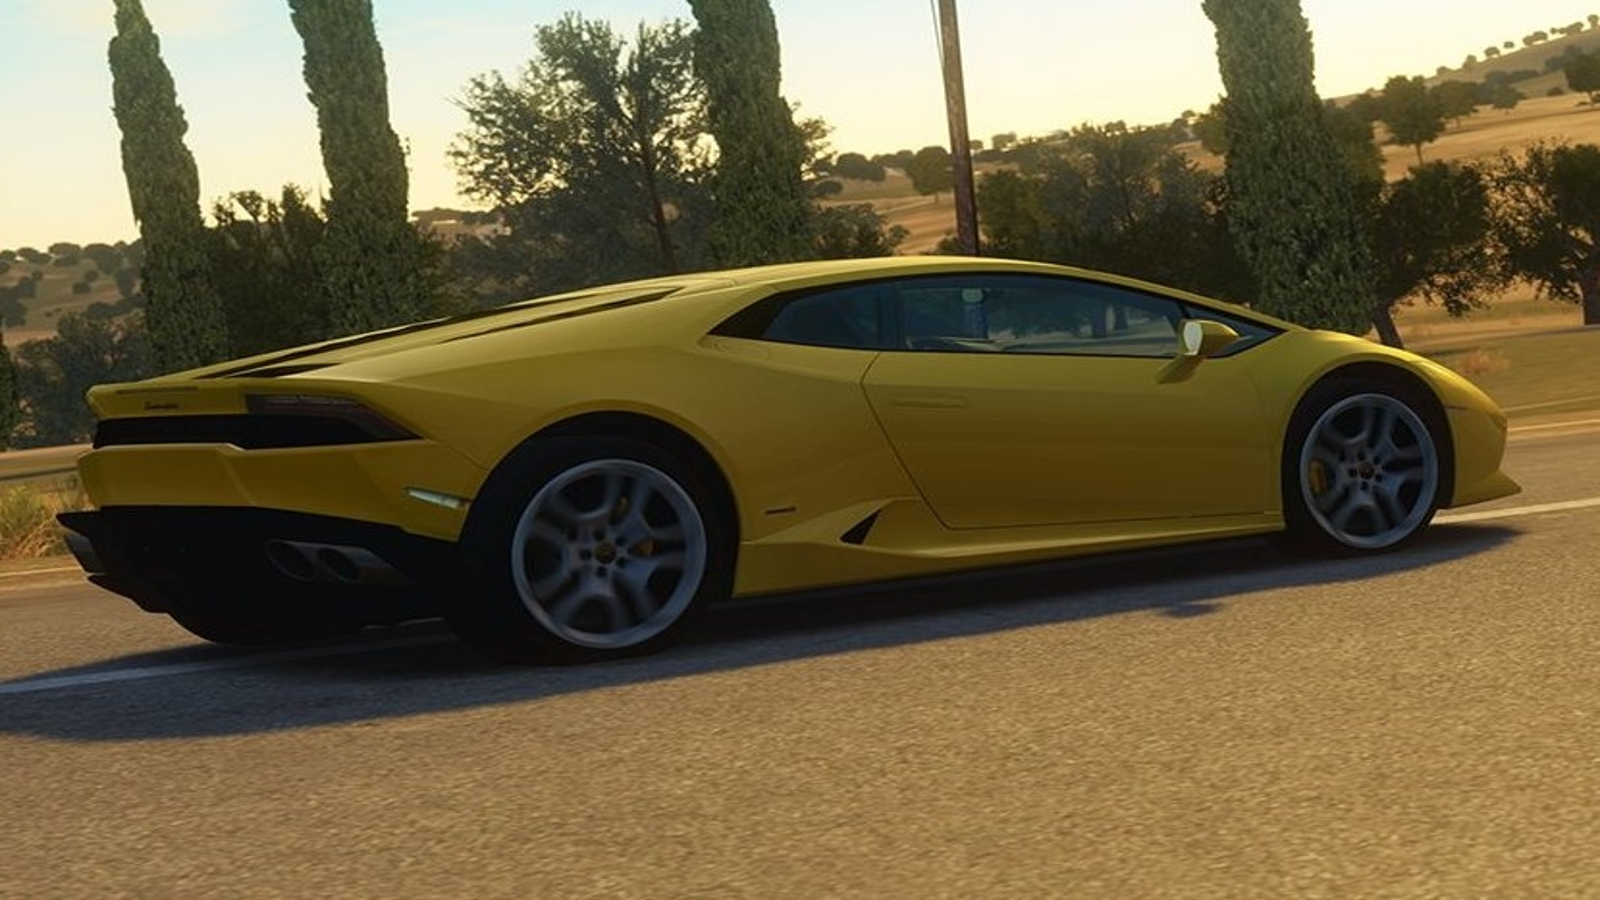 Forza Horizon 2: versão para Xbox 360 terá mundo menor e menos carros